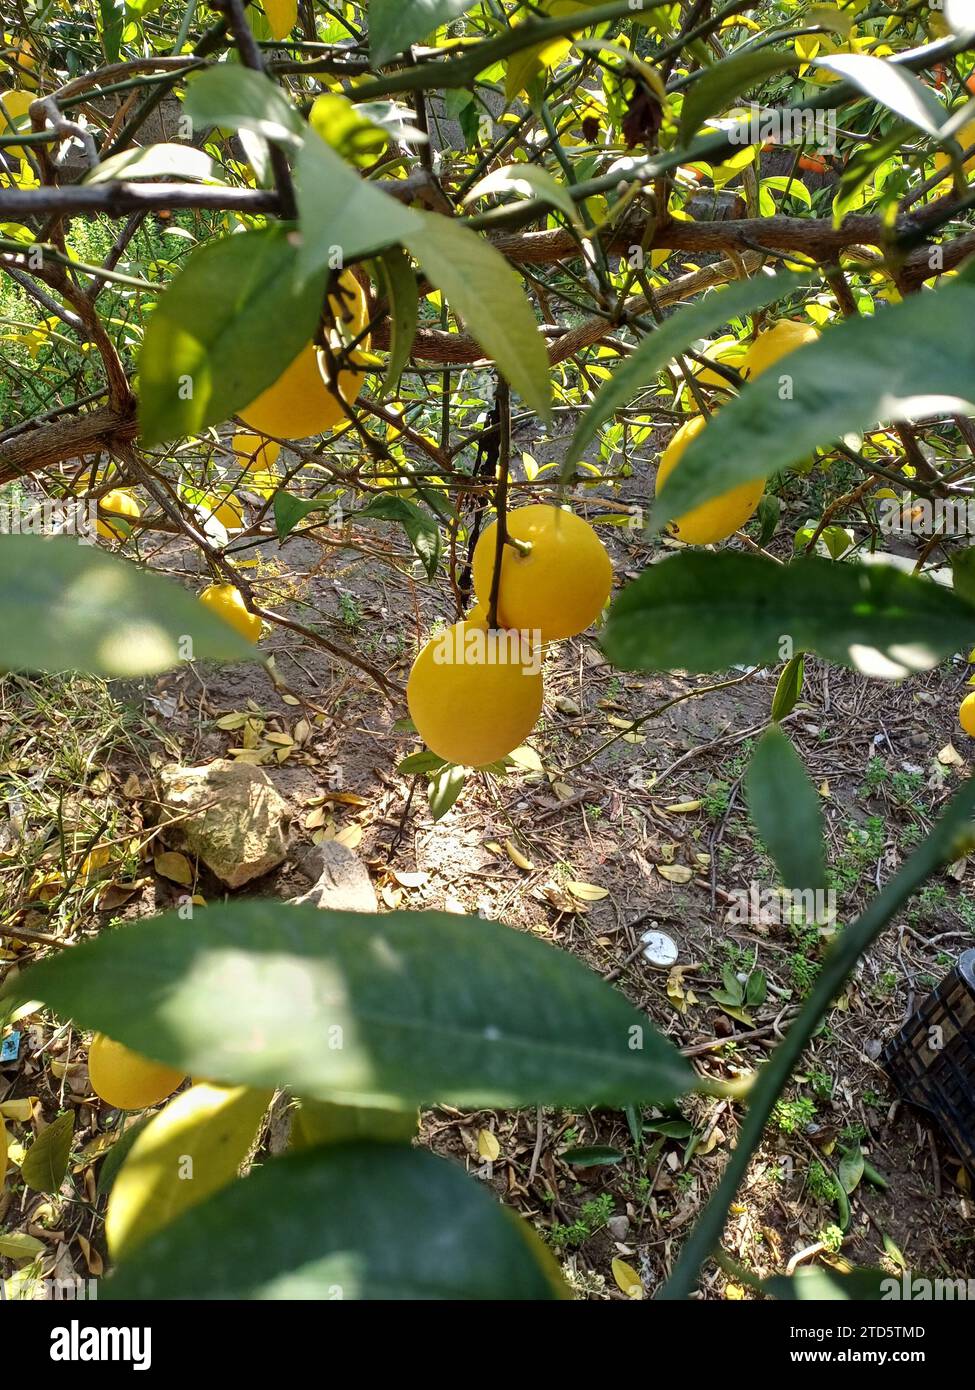 Limone maturo, limoni succosi e gialli sui rami degli alberi in giardino. Foto Stock